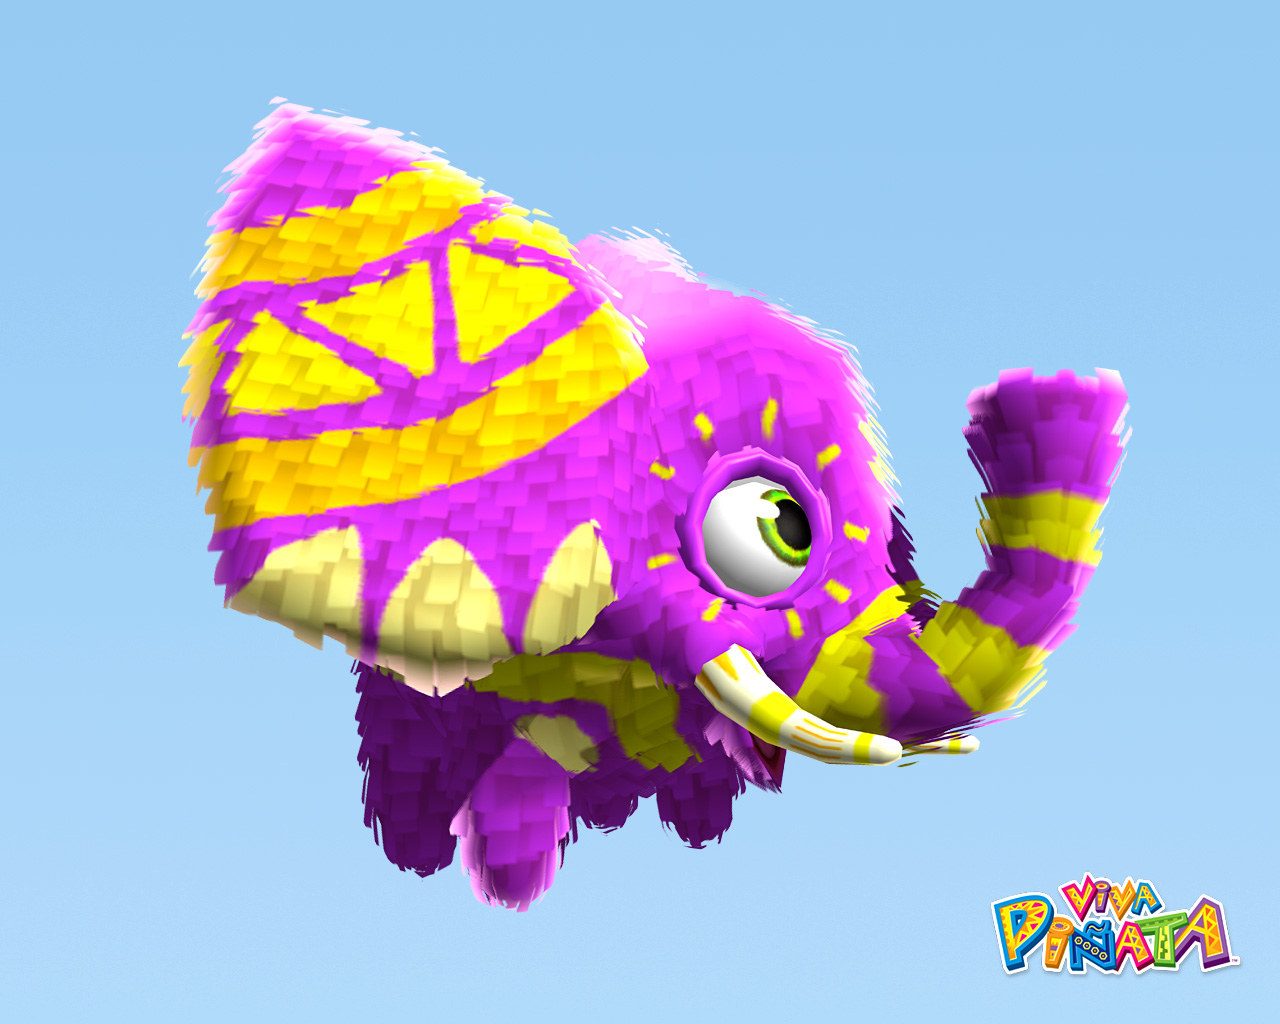 Viva Piñata is a vibrant world of living piñata animals filled with spontan...